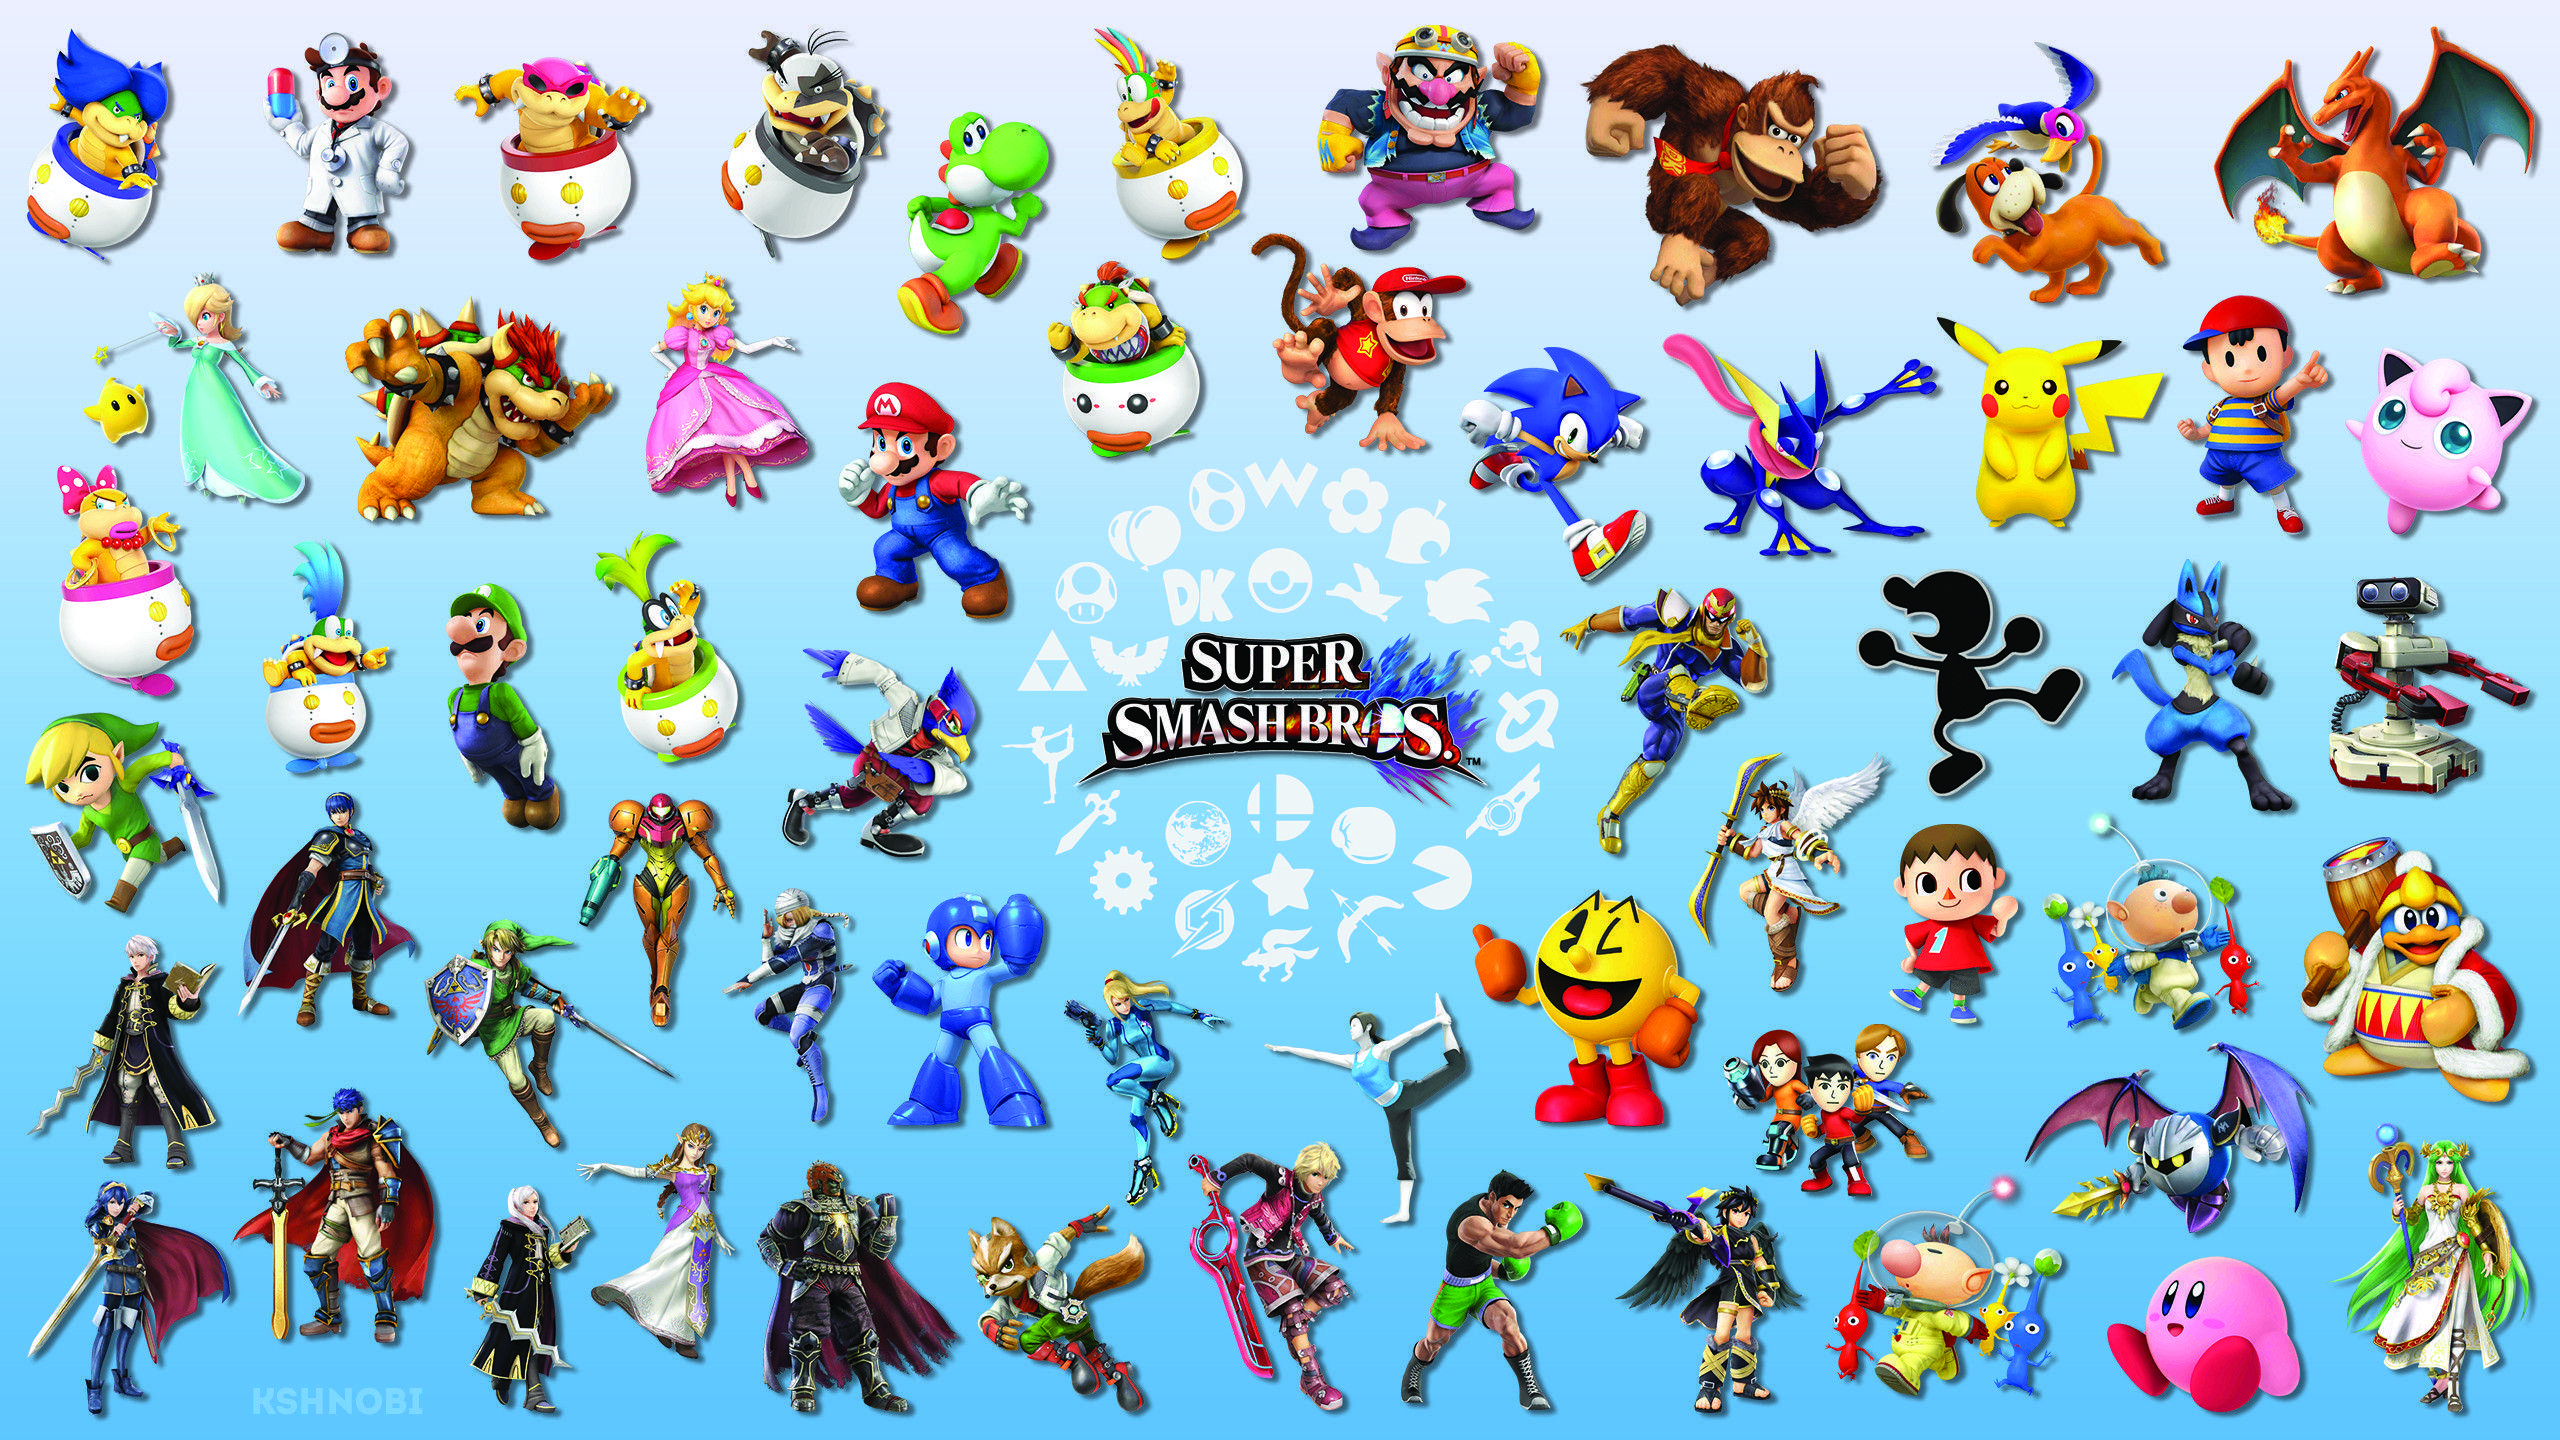 Super Smash Bros Wallpapers Top Free Super Smash Bros Backgrounds Wallpaperaccess 3738